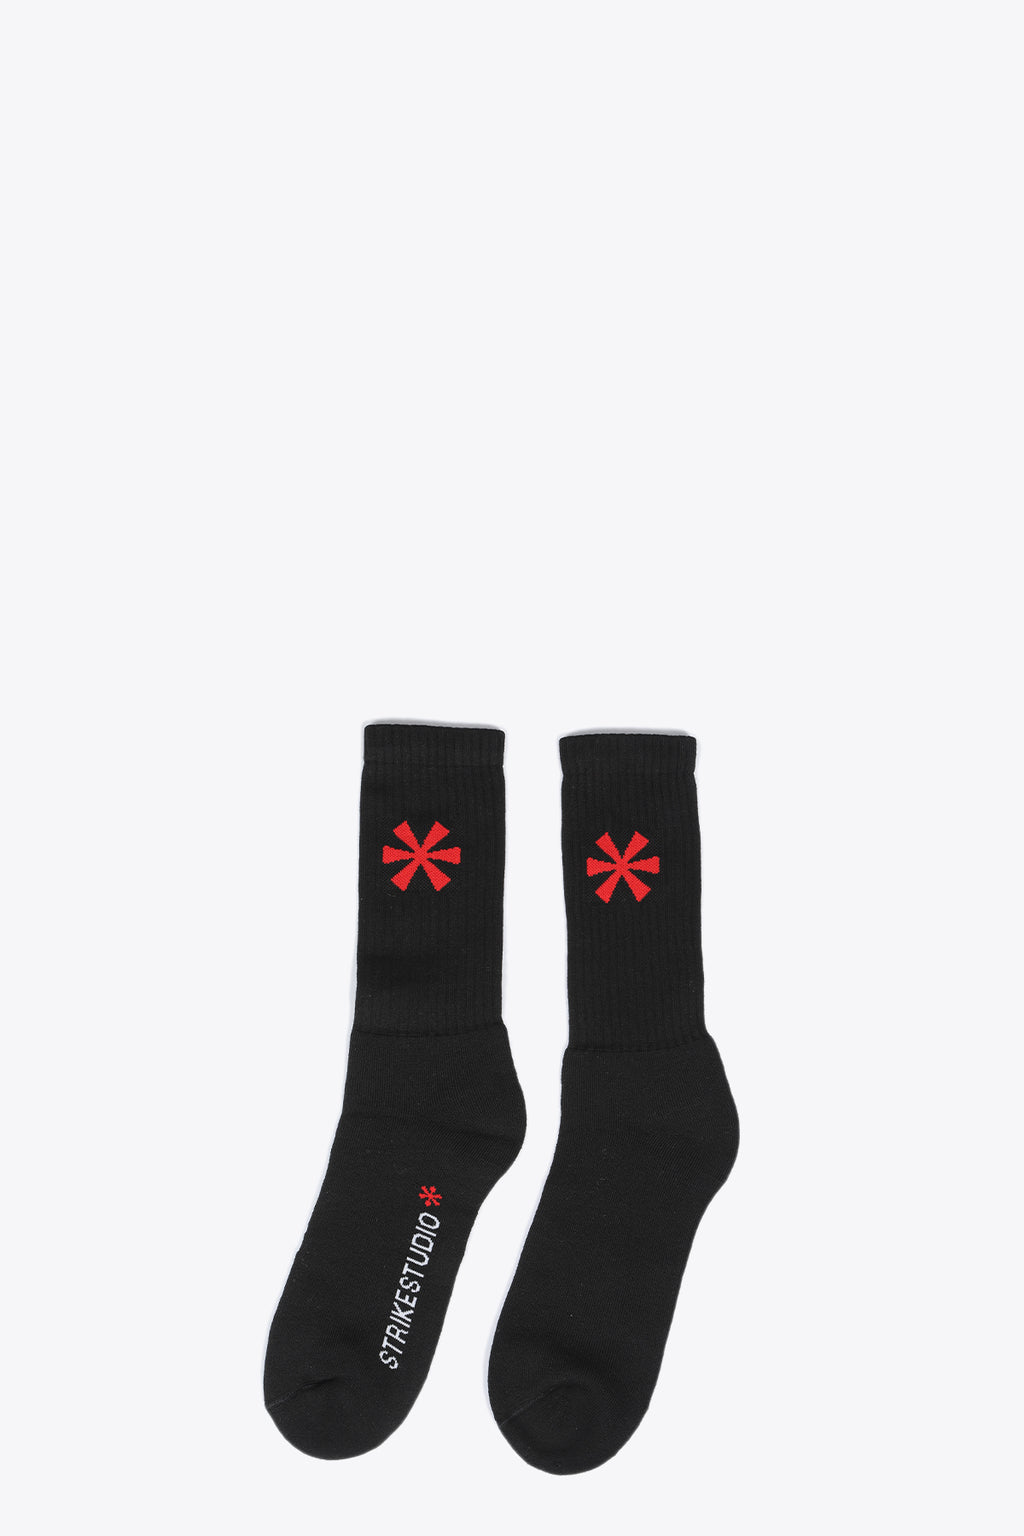 alt-image__Black-ribbed-socks-with-red-logo-printed.-